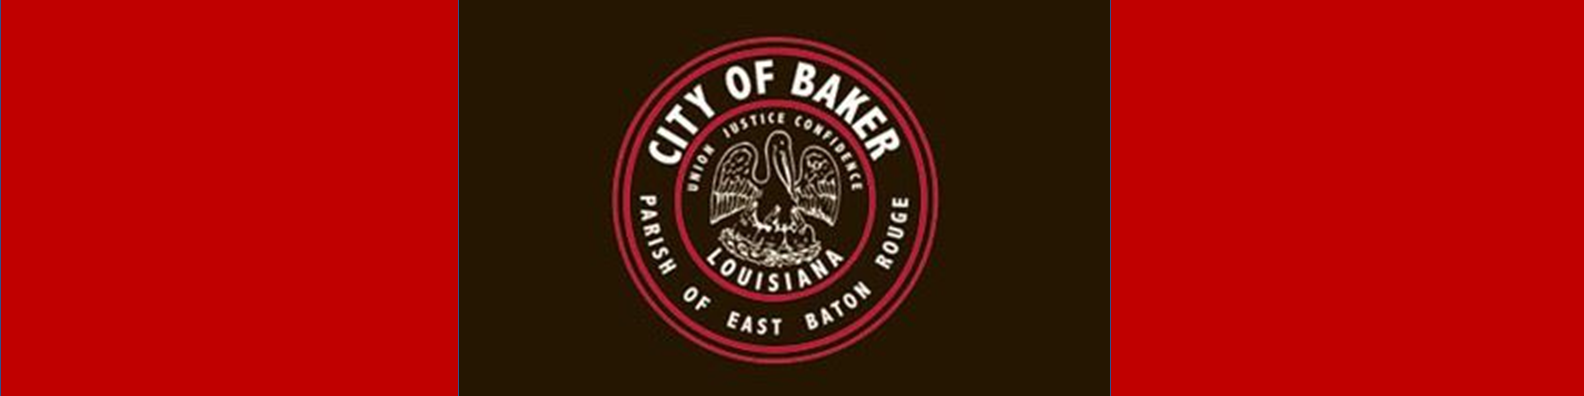 City of Baker Default